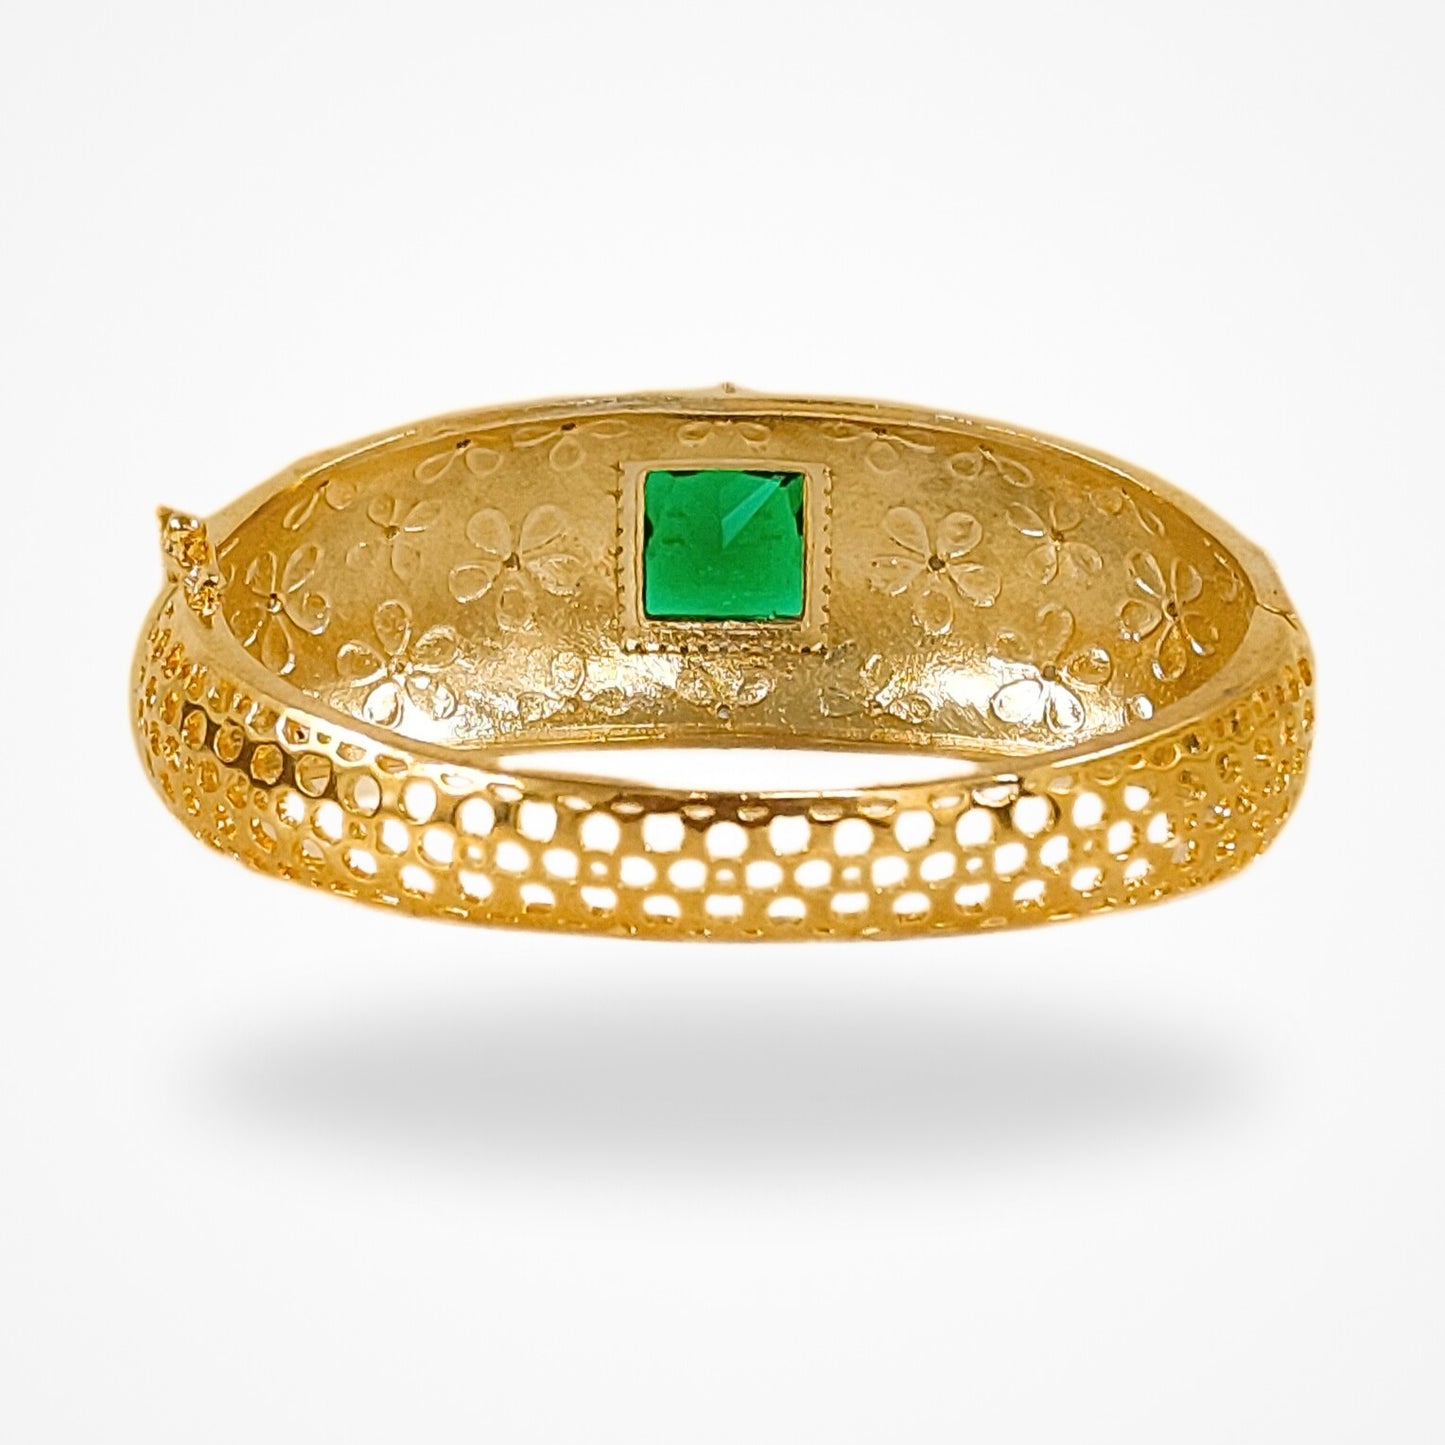 Bdiva 18k Gold Plated Turquoise Statement Bracelet